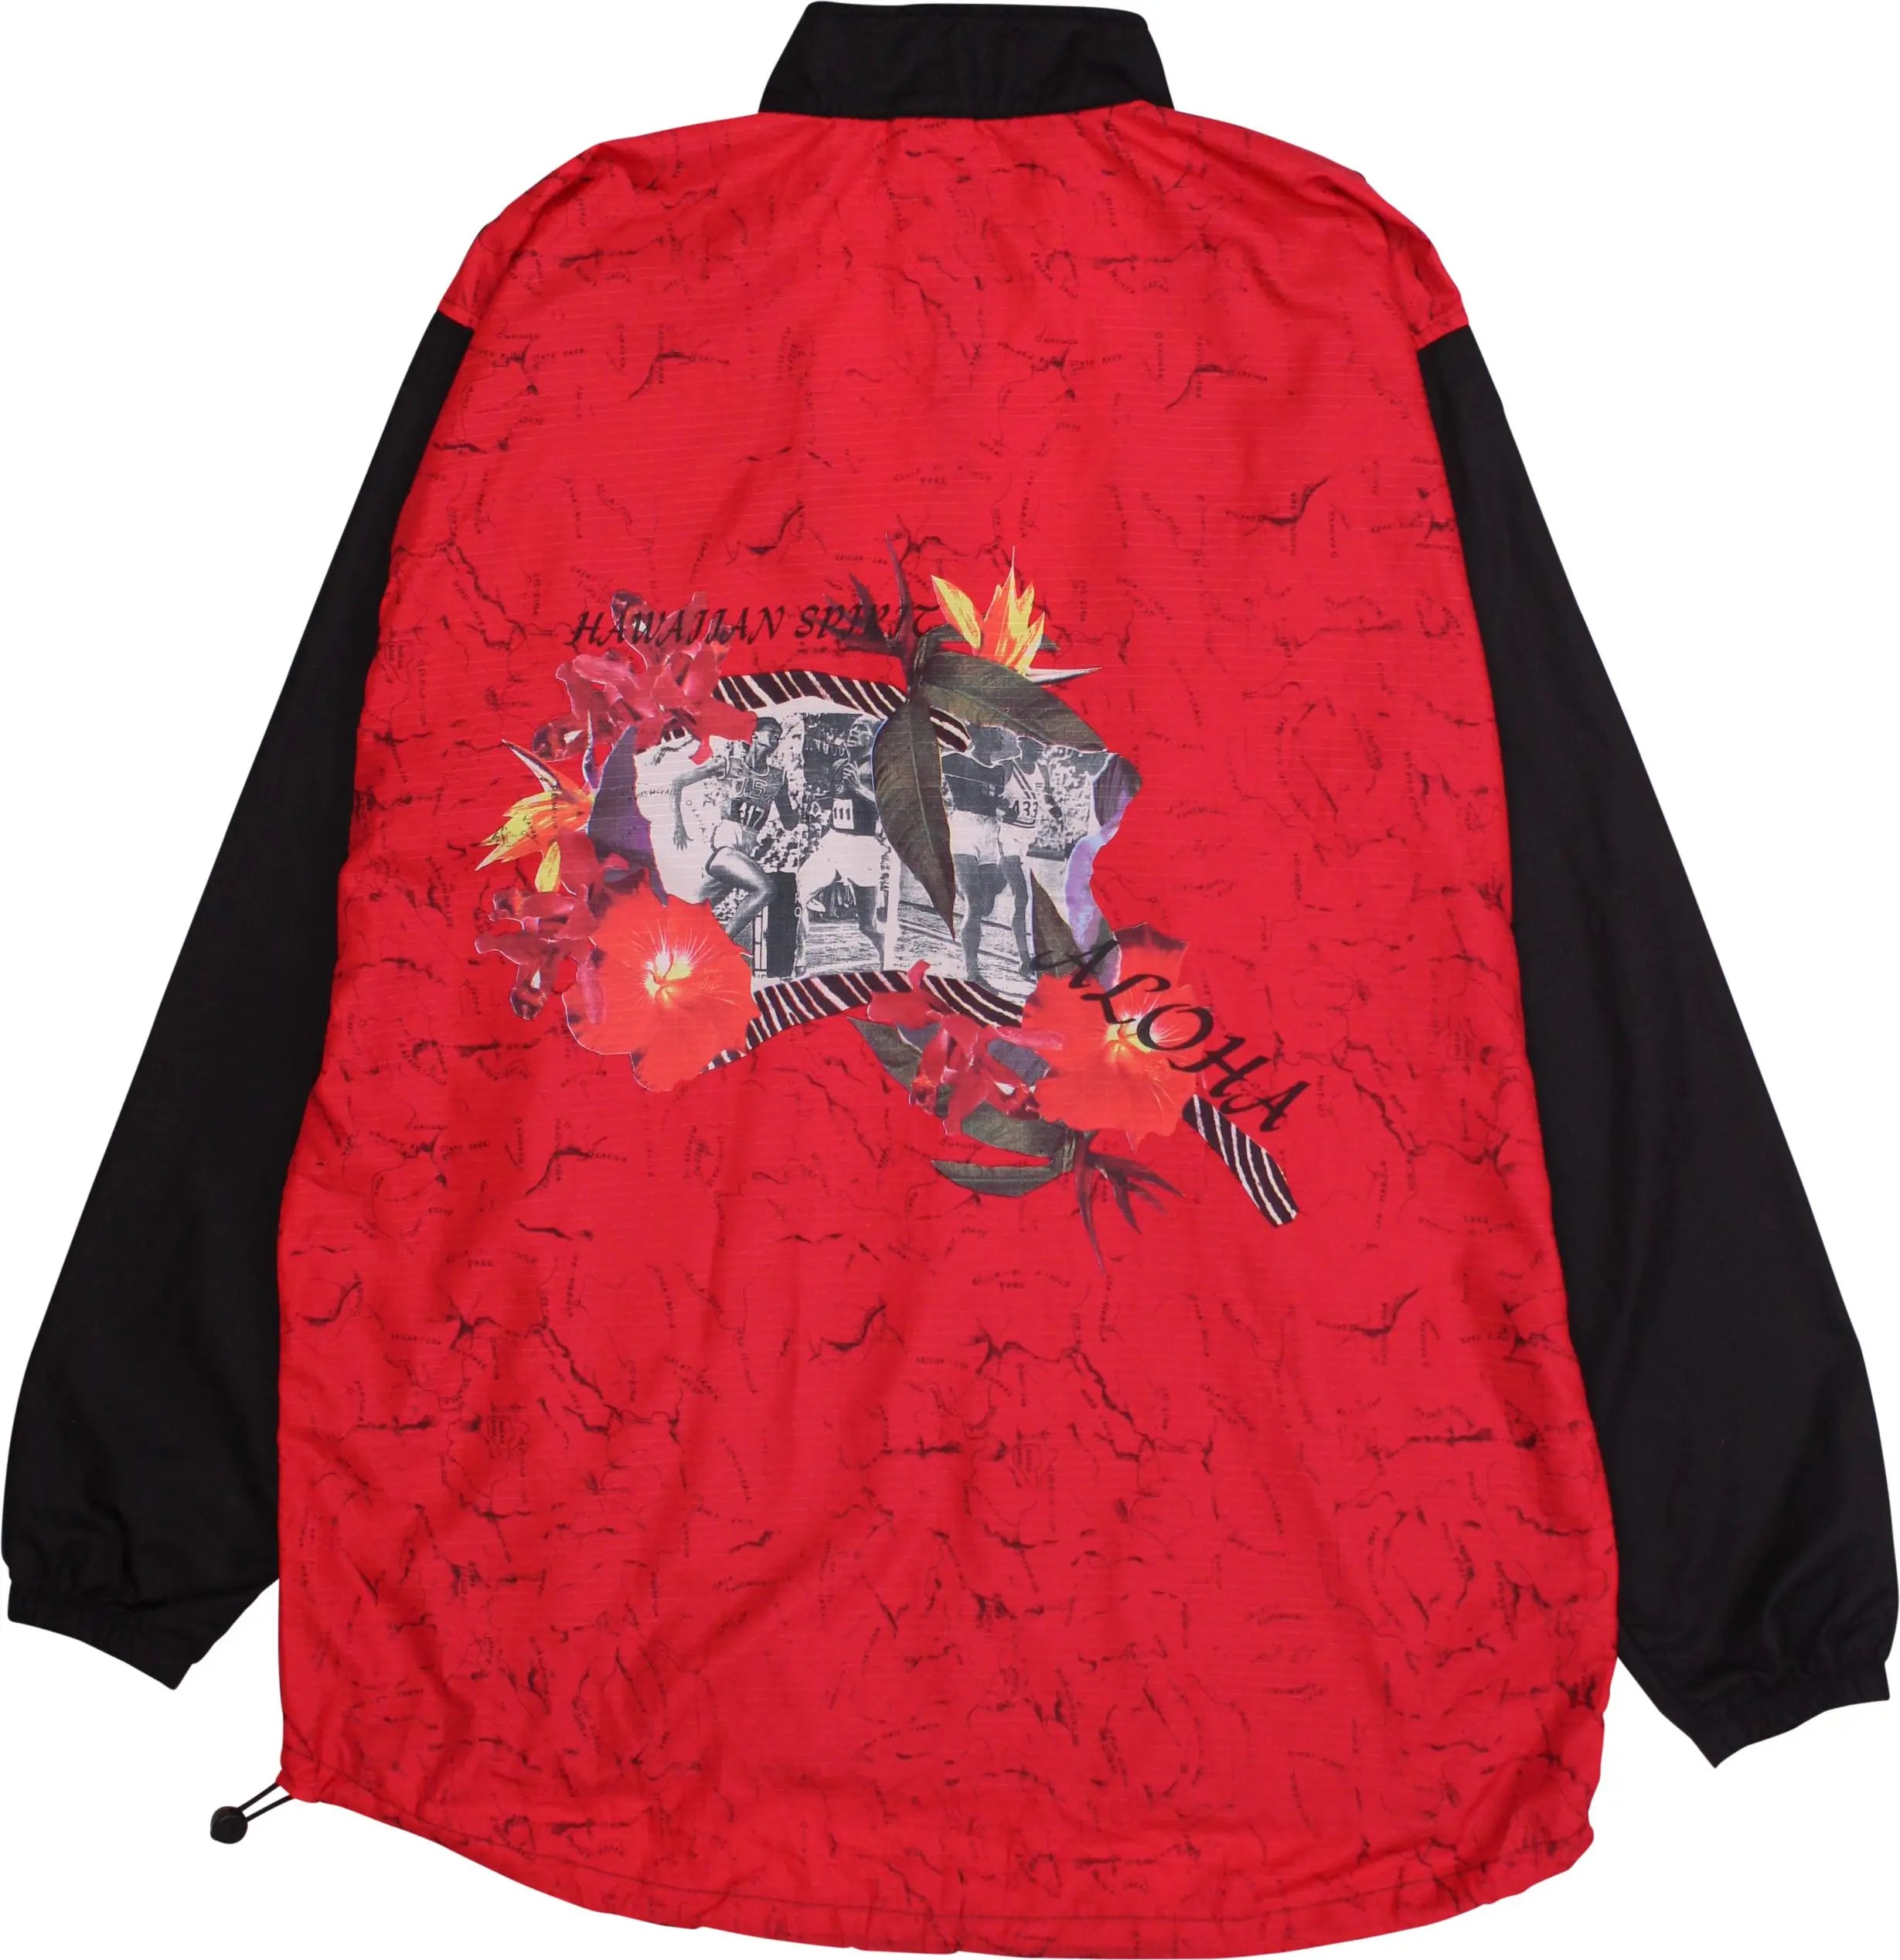 Odlo - Running Jacket- ThriftTale.com - Vintage and second handclothing